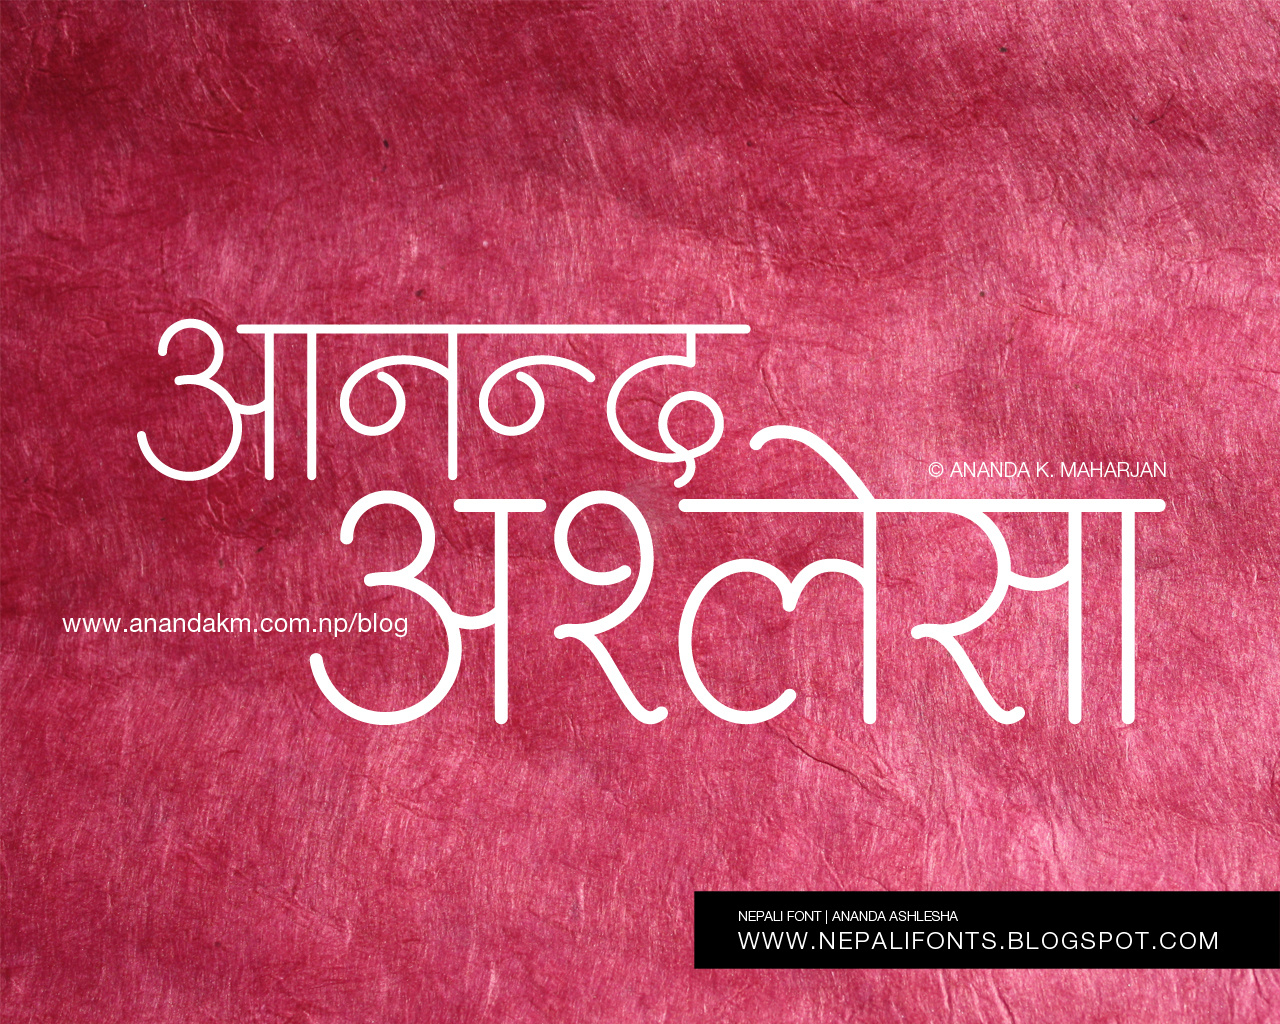 ... Nepali Fonts: Nepali words wallpapers - 